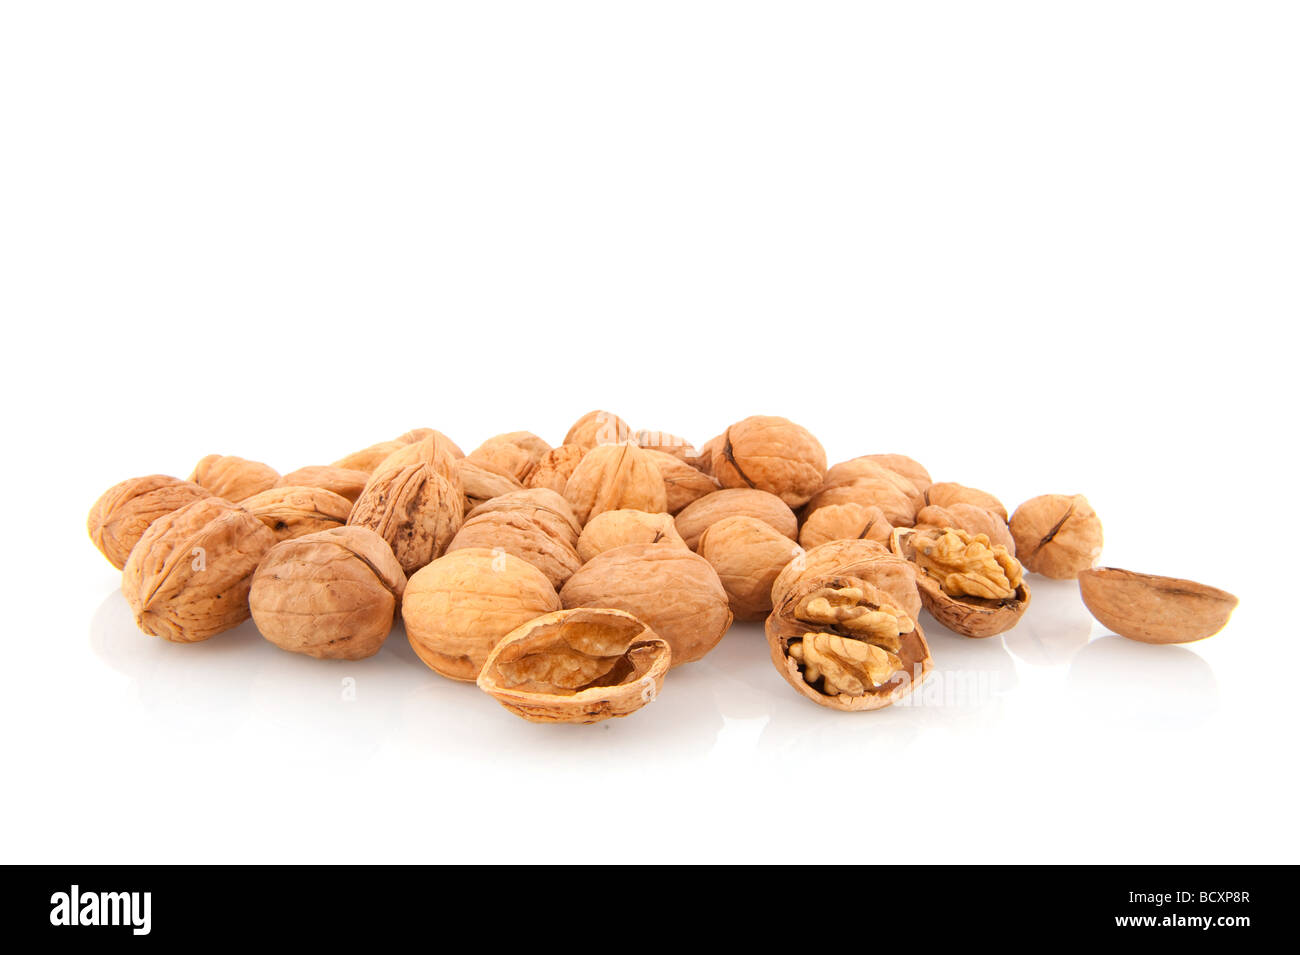 Many tasty whole walnuts isolated over white Stock Photo